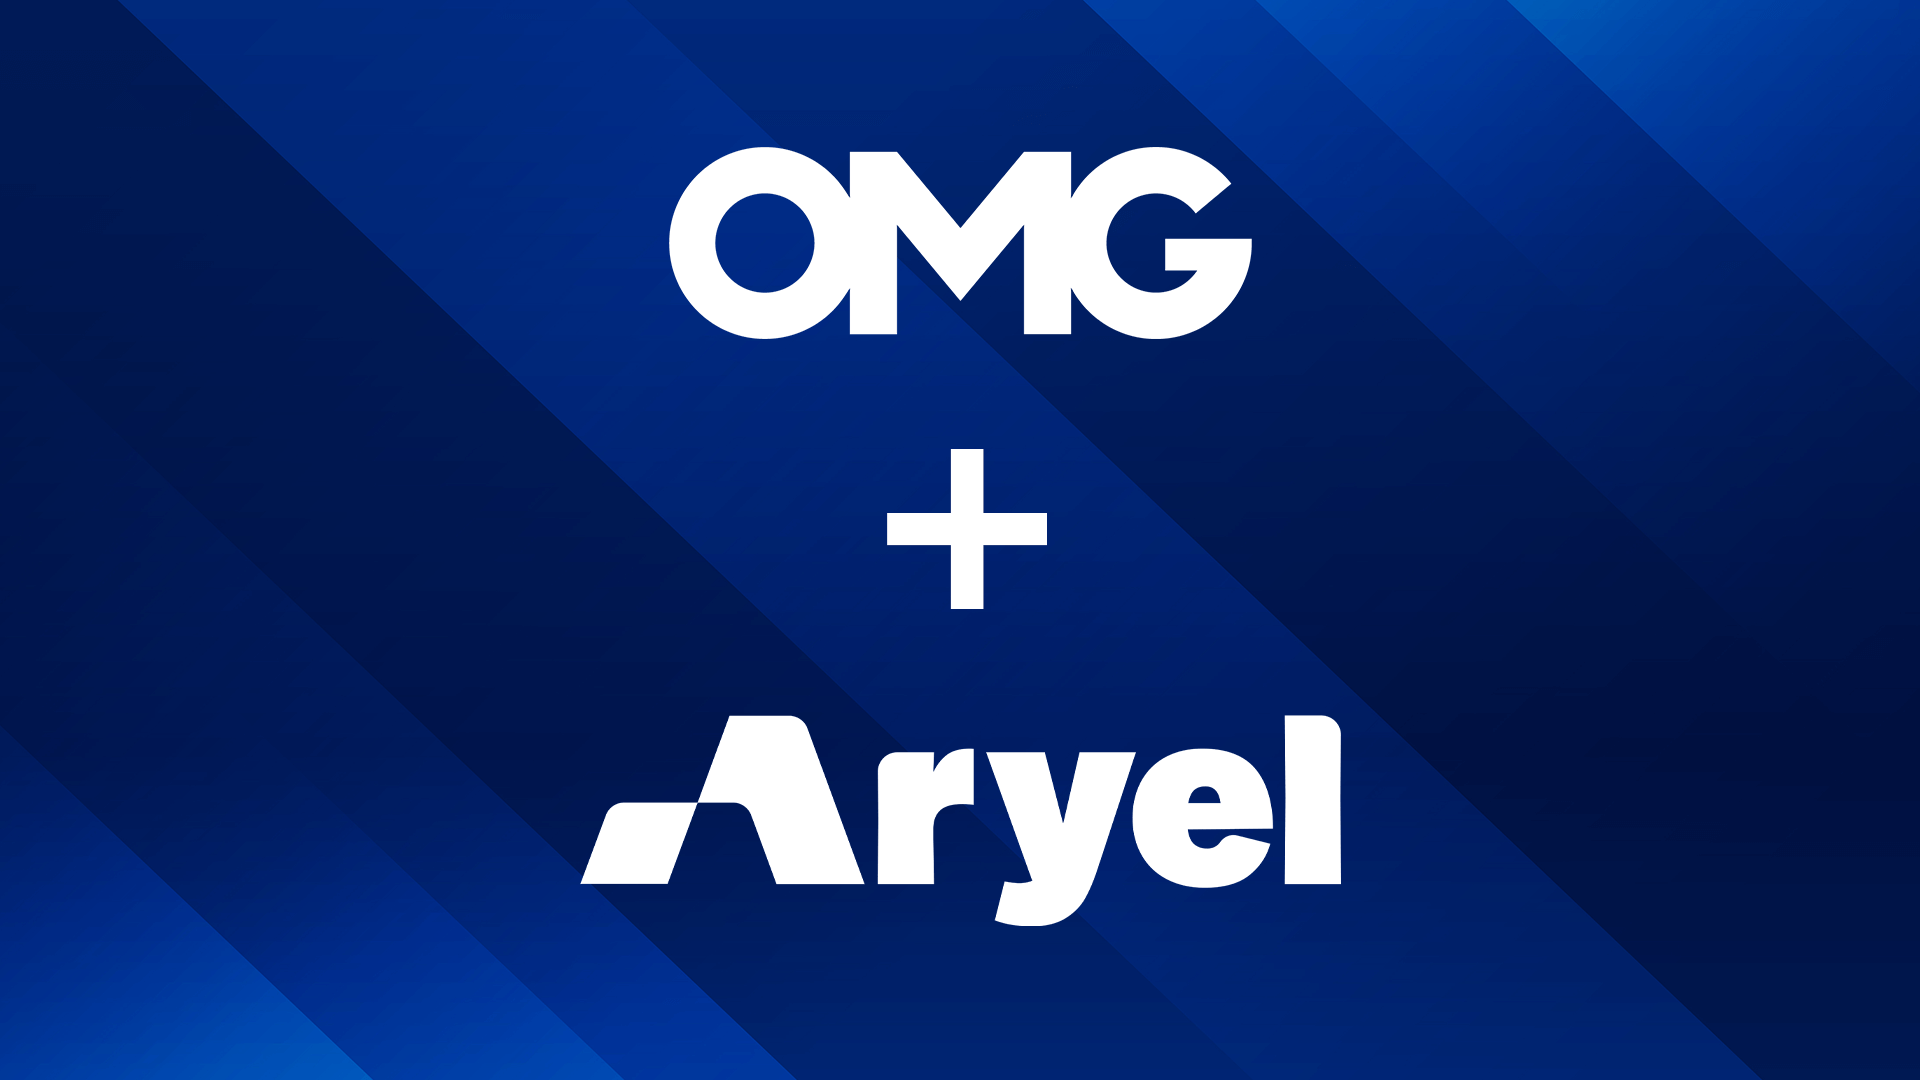 Aryel & OMG partnership to revolutionize Display Advertising through Augmented Reality